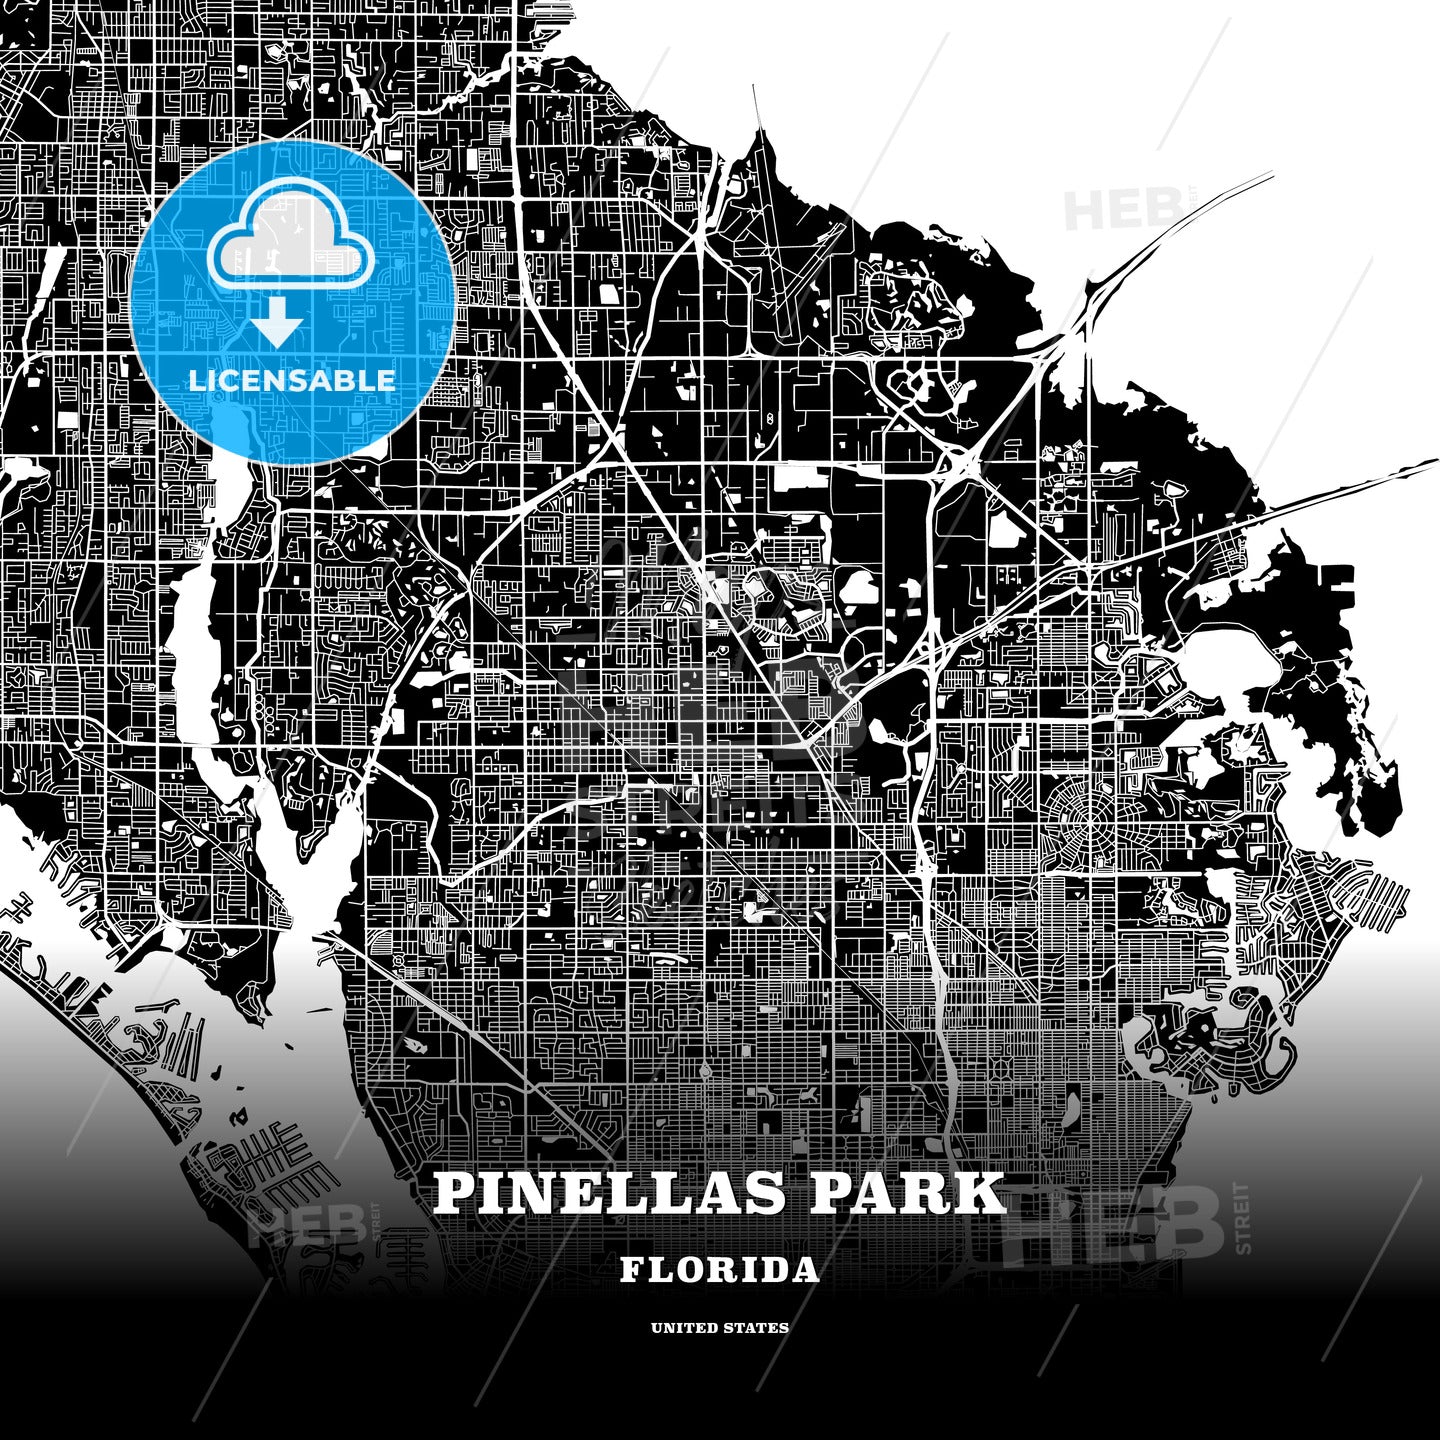 Pinellas Park, Florida, USA map